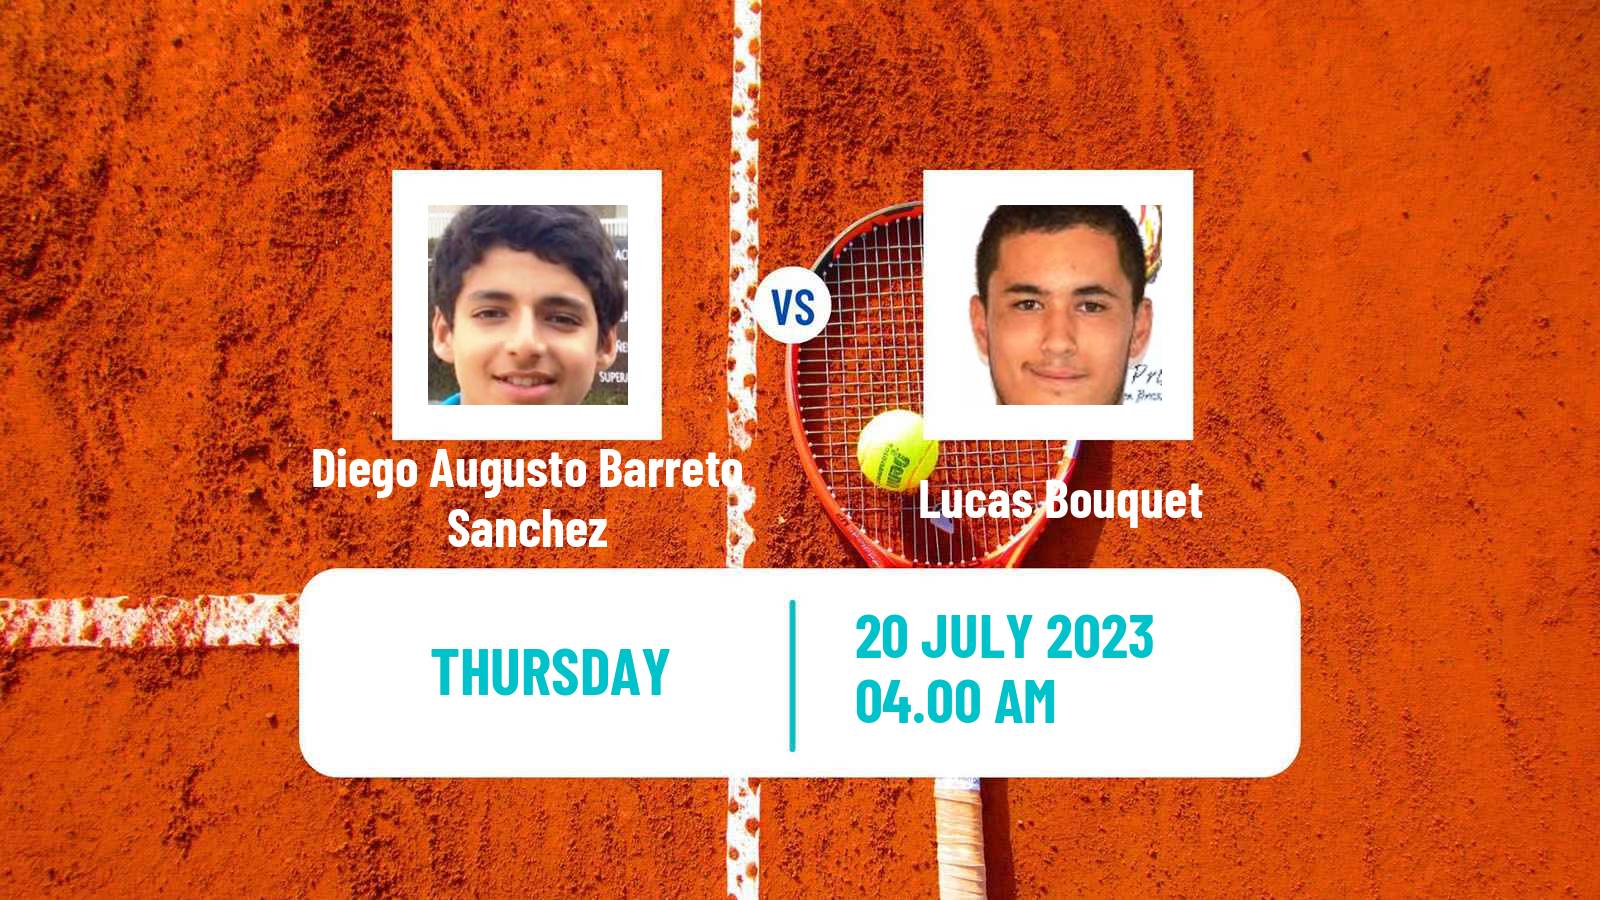 Tennis ITF M25 Gandia Men Diego Augusto Barreto Sanchez - Lucas Bouquet